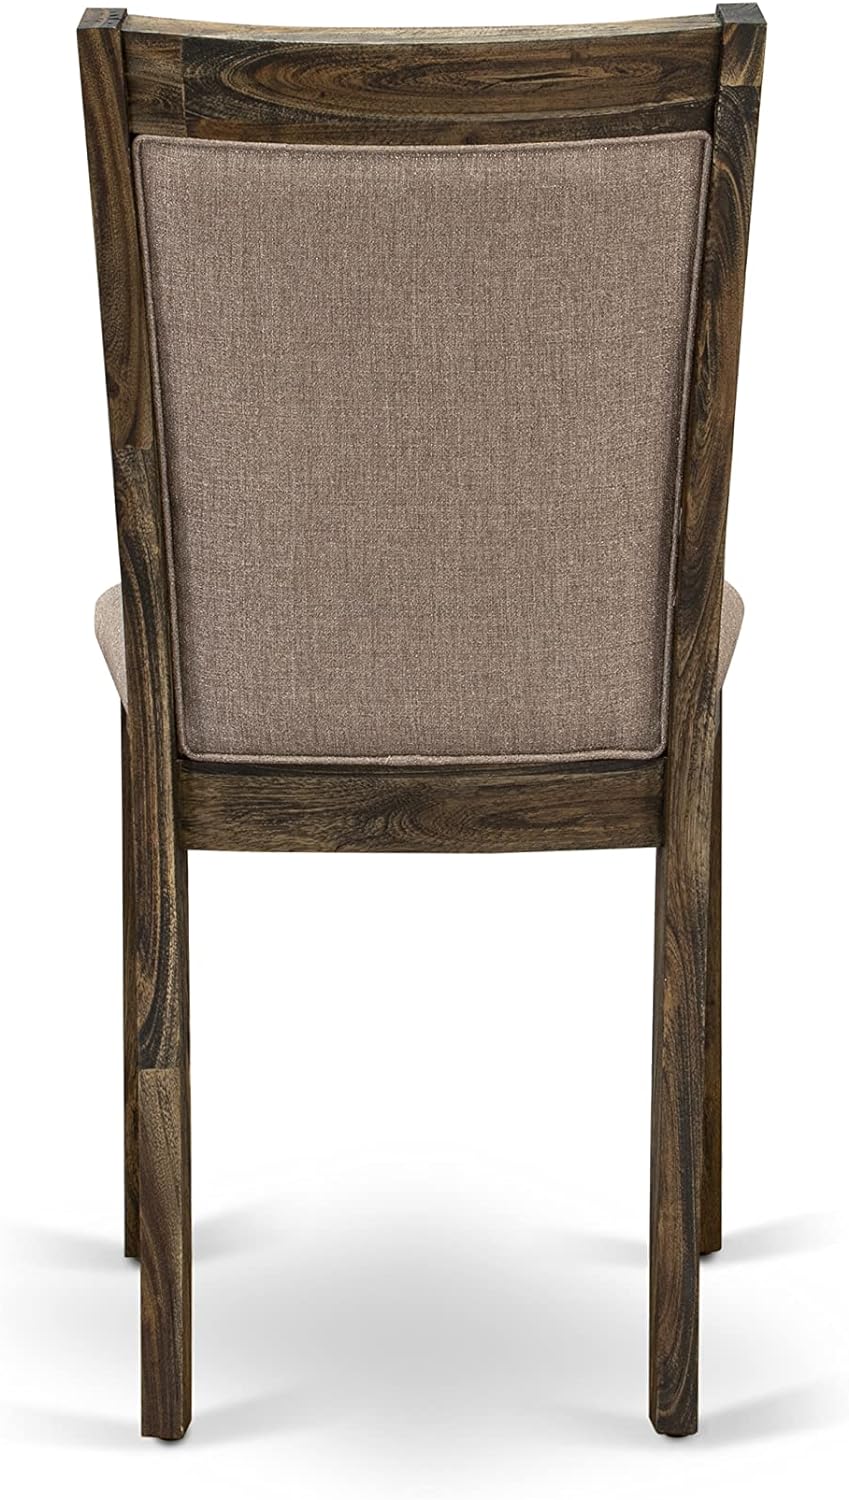 Monza Parson Juego de 2 sillas acolchadas de tela de lino color caqui oscuro,